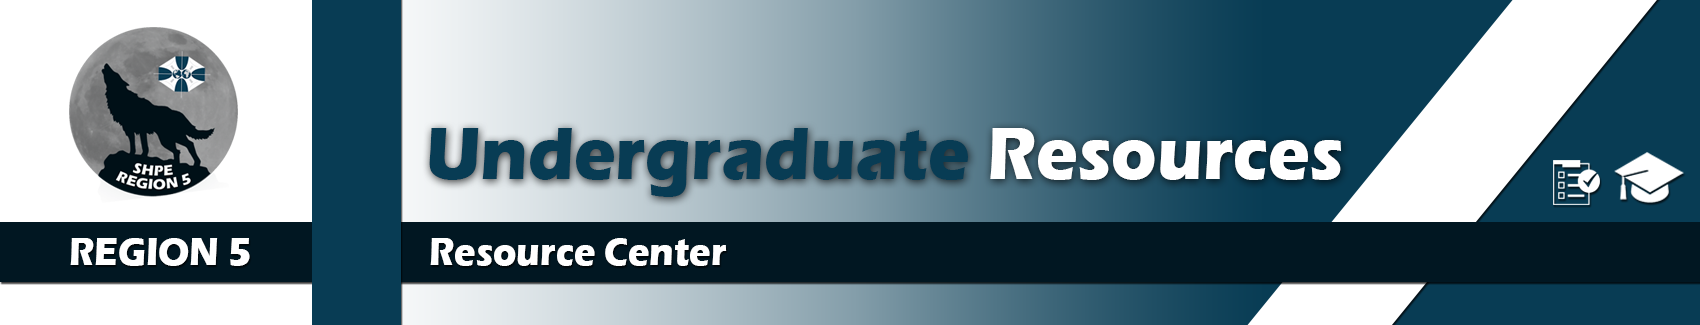 undergraduate-resources-banner